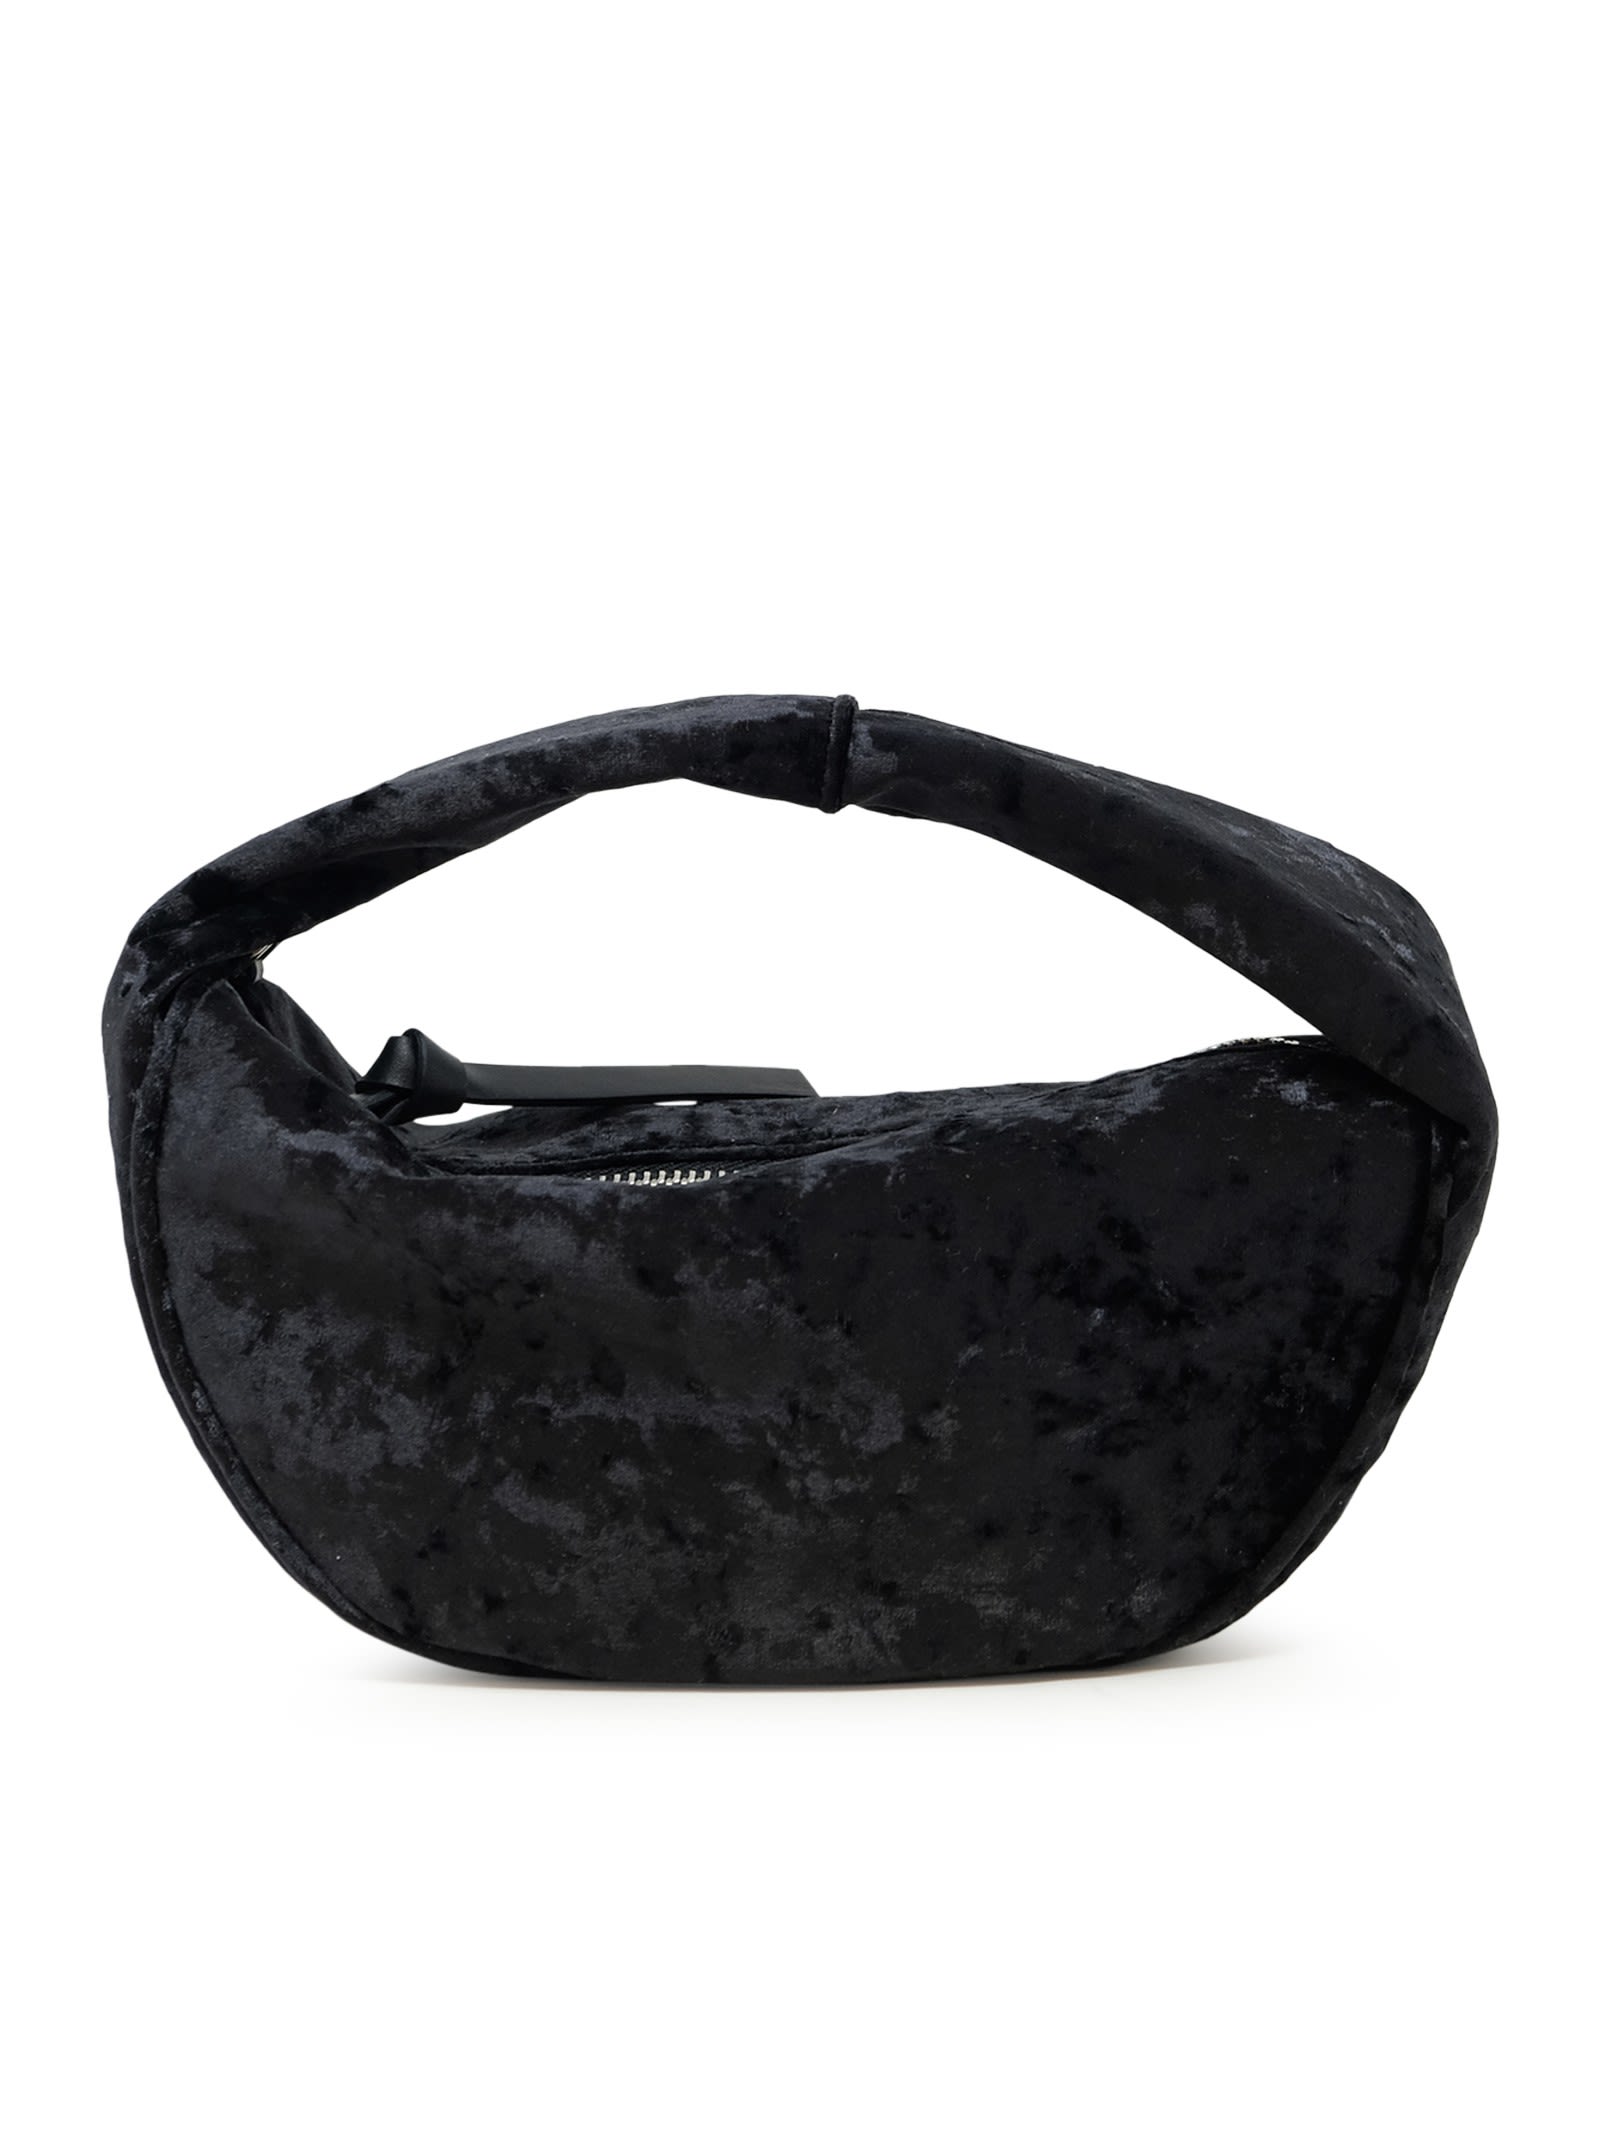 By Far Baby Cush Black Crushed Velvet Handbag